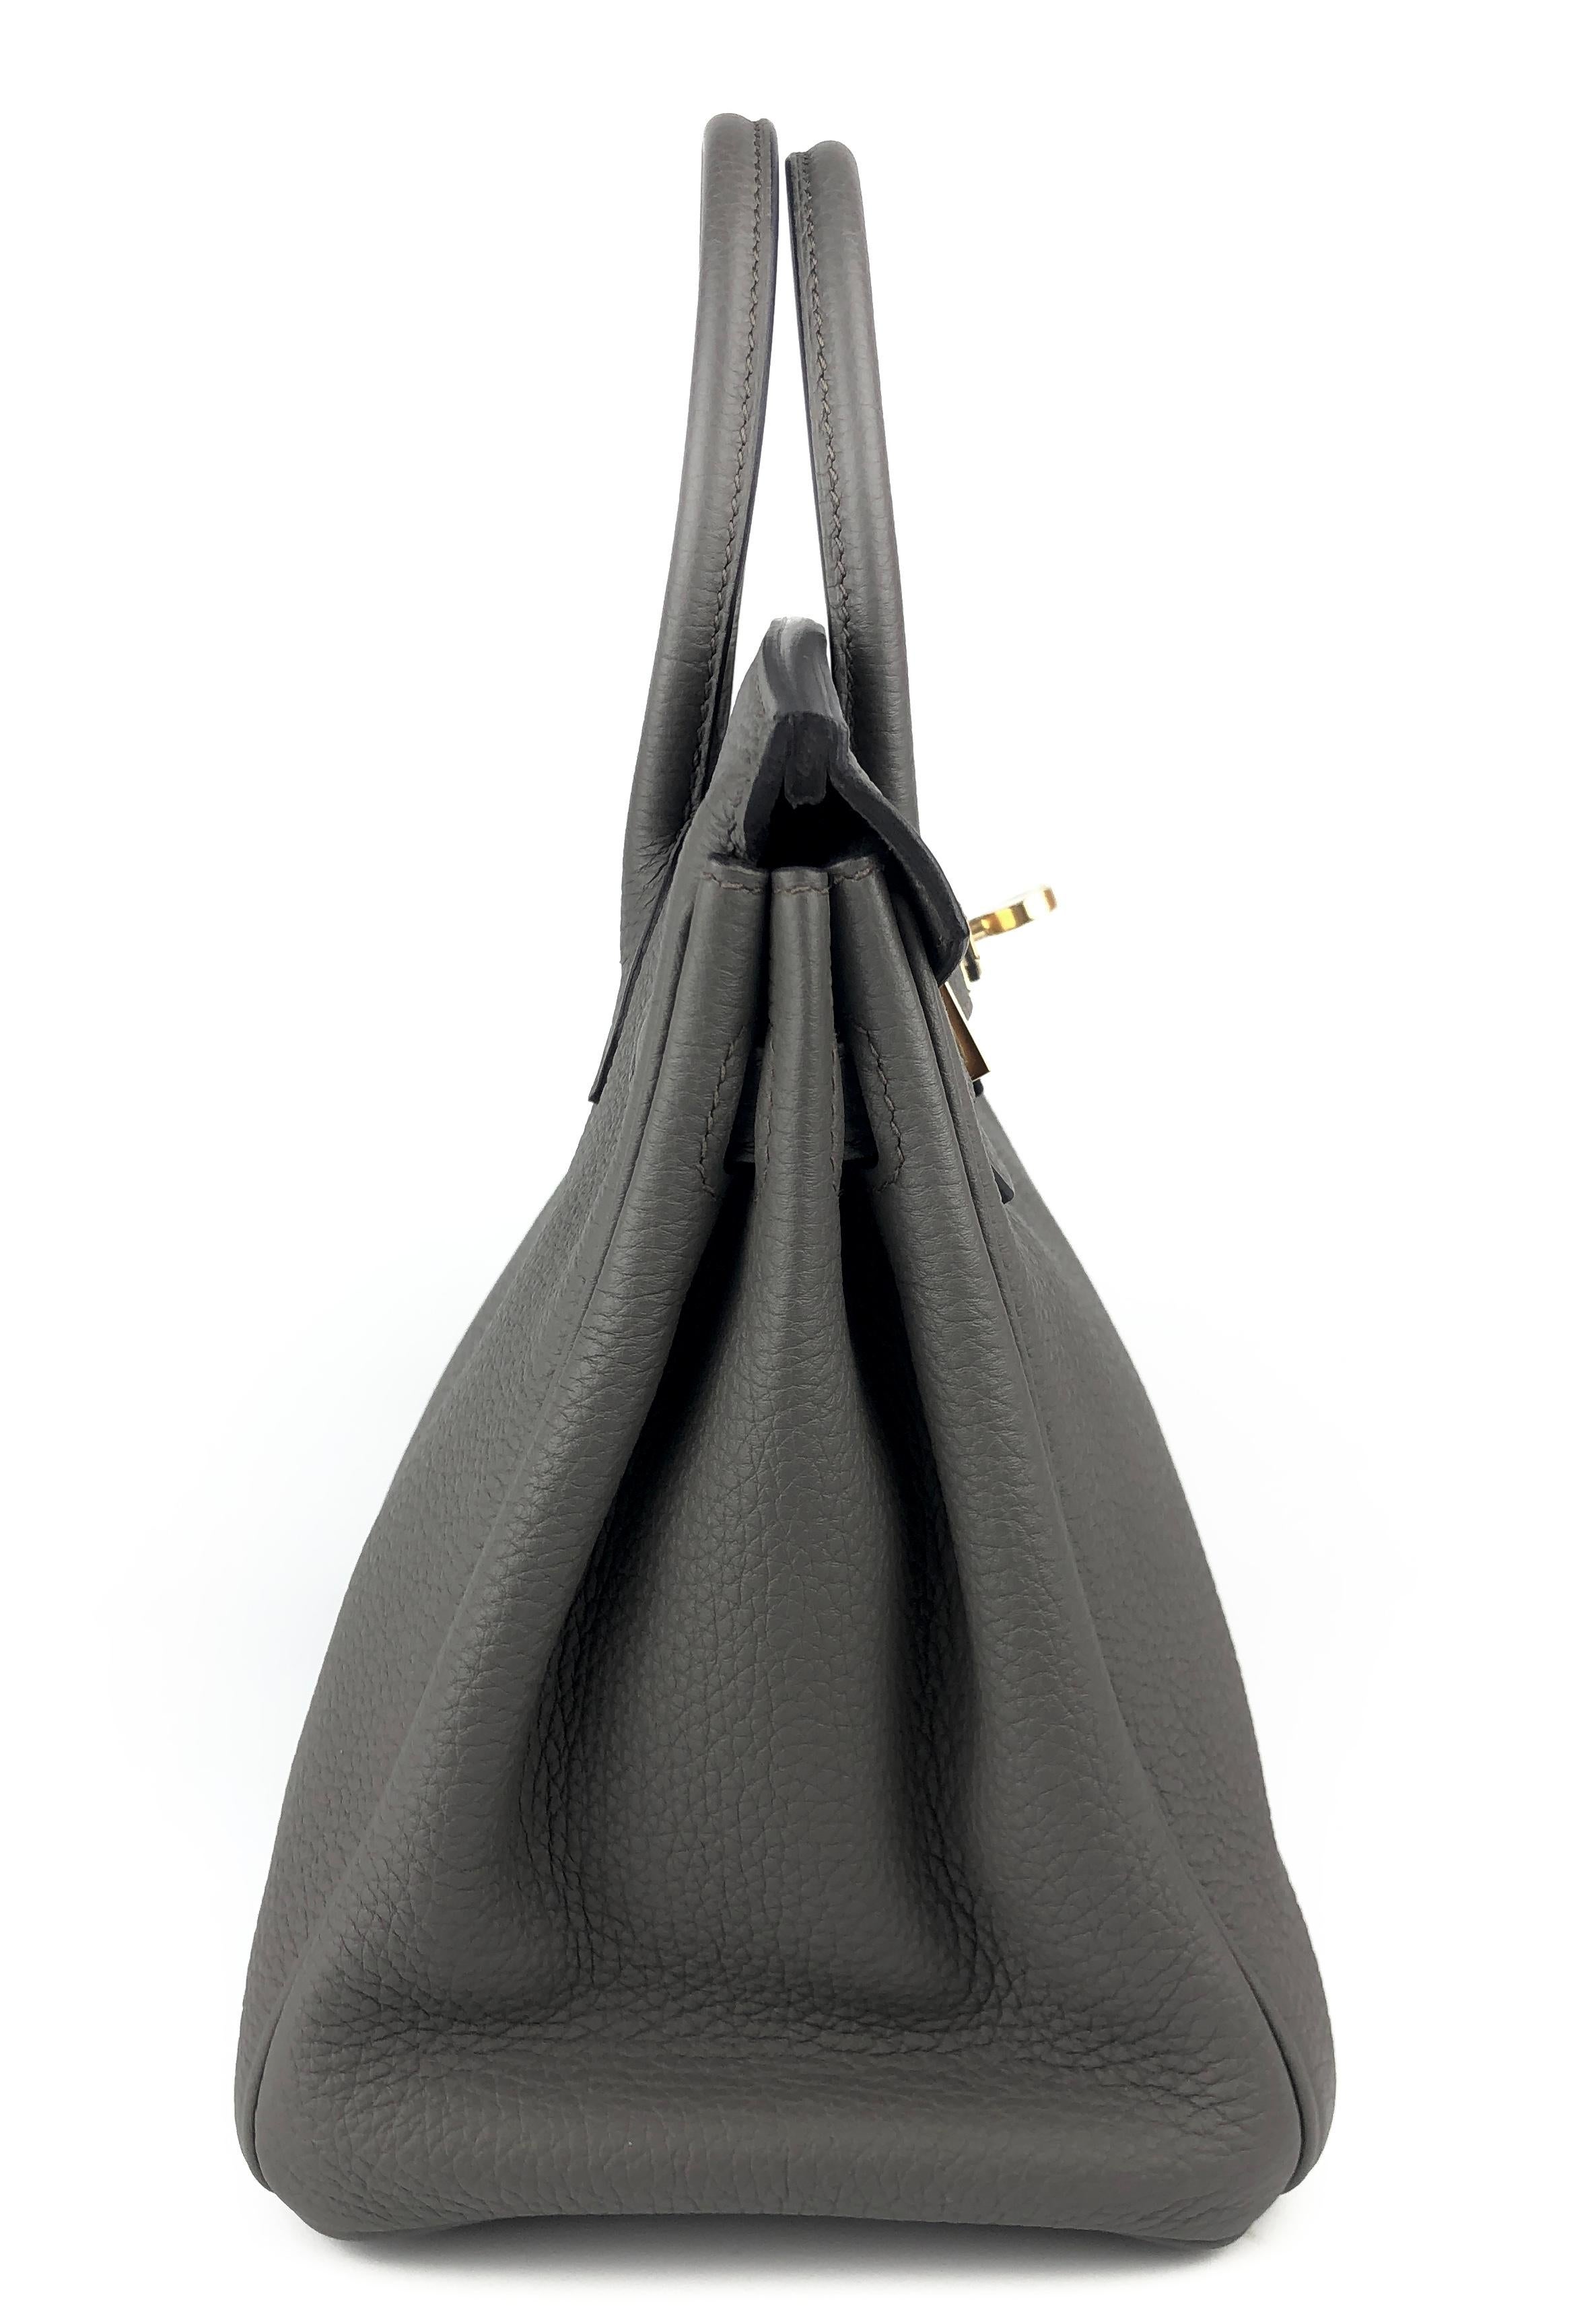 Hermes Birkin 25 Etain Gray Togo Leather Handbag Gold Hardware 2020 For Sale 3